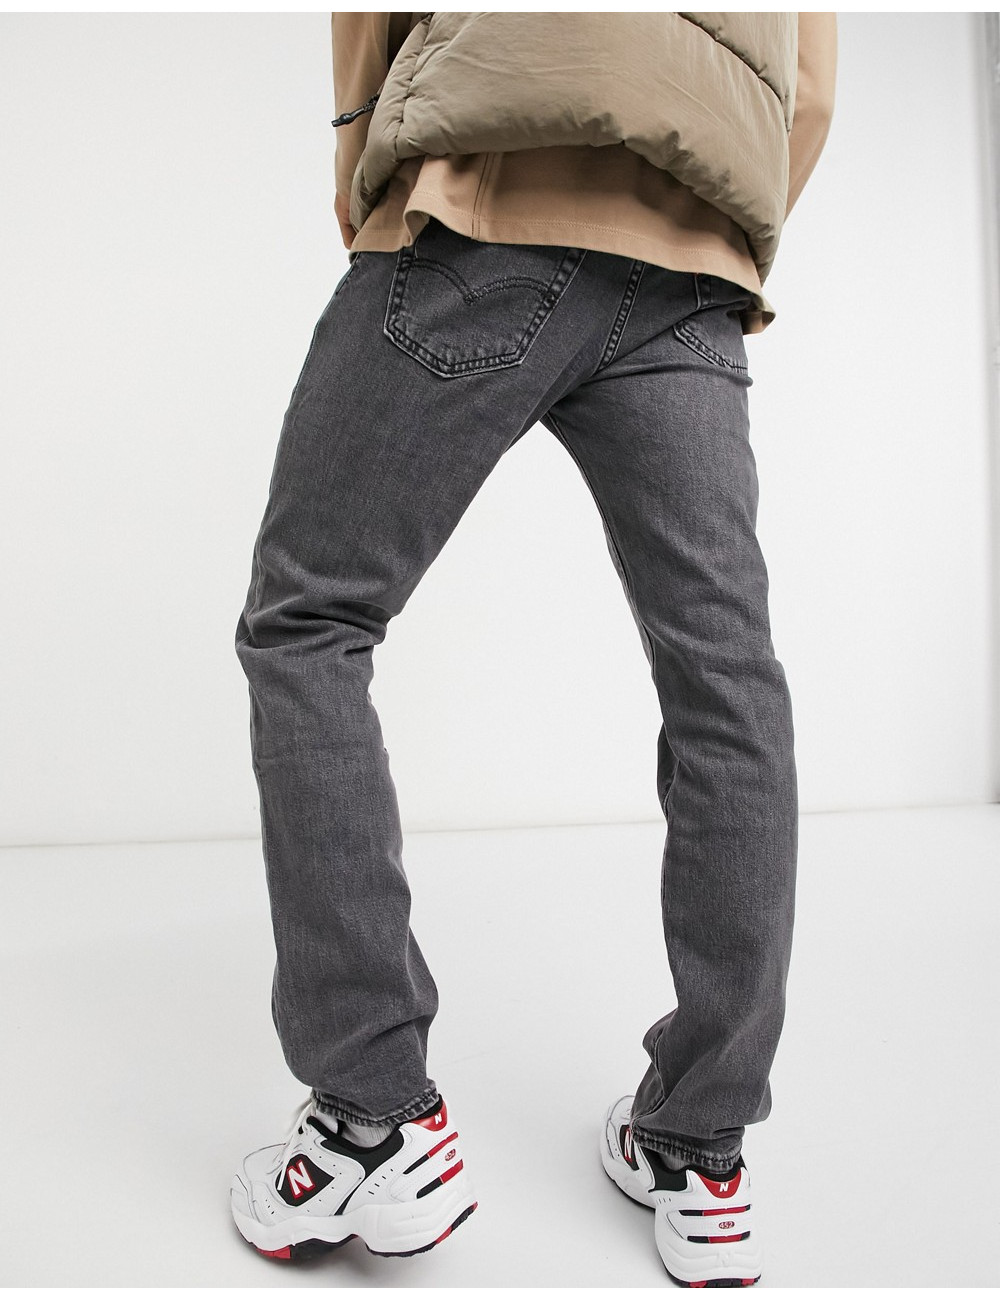 Levi's 511 slim fit jeans...